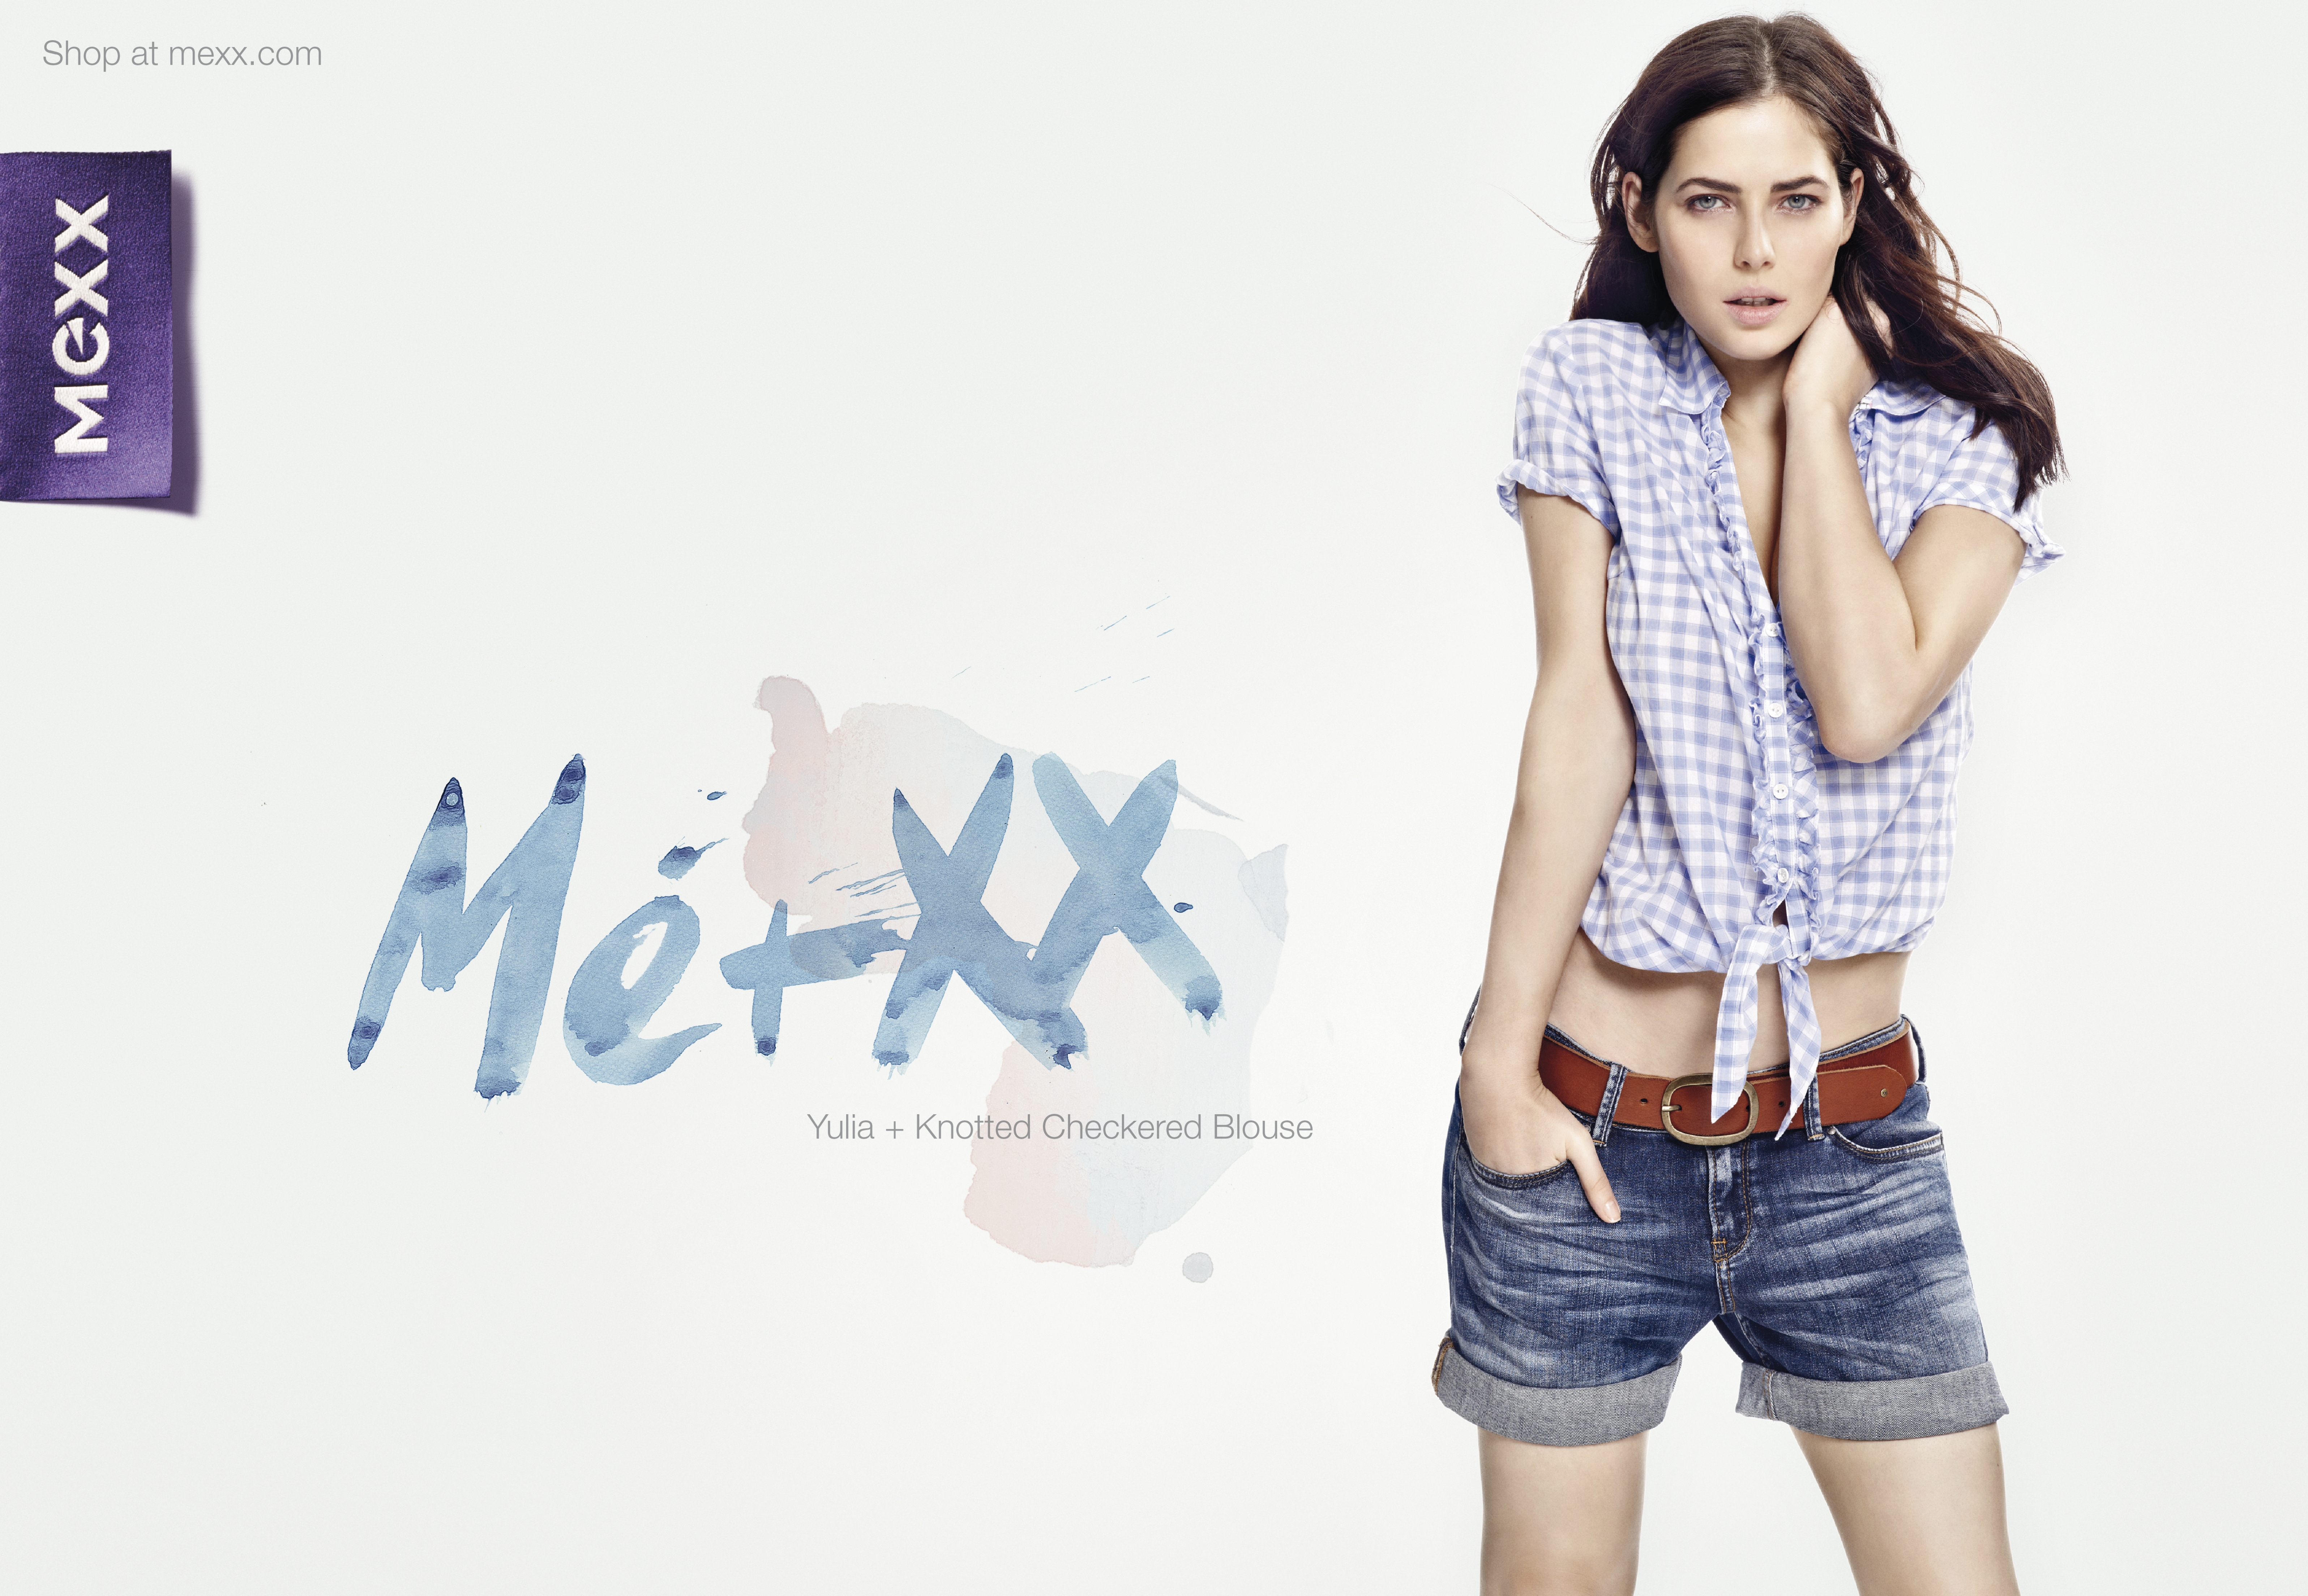 Mexx Me XX SS 2011 Campaign 1